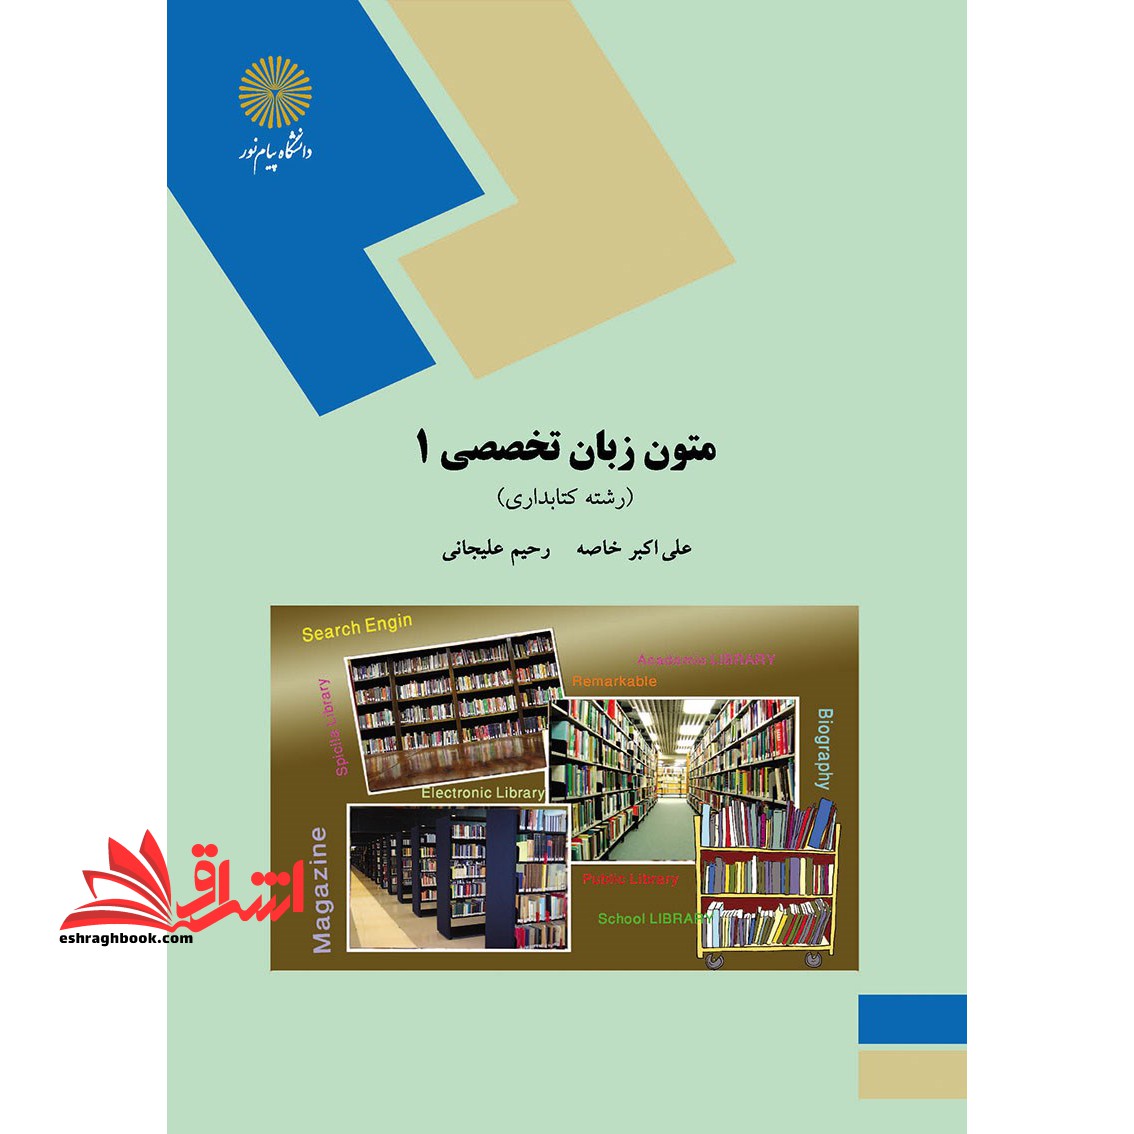 English in library and information scinces (۱) متون زبان تخصصصی (۱) رشته کتابداری